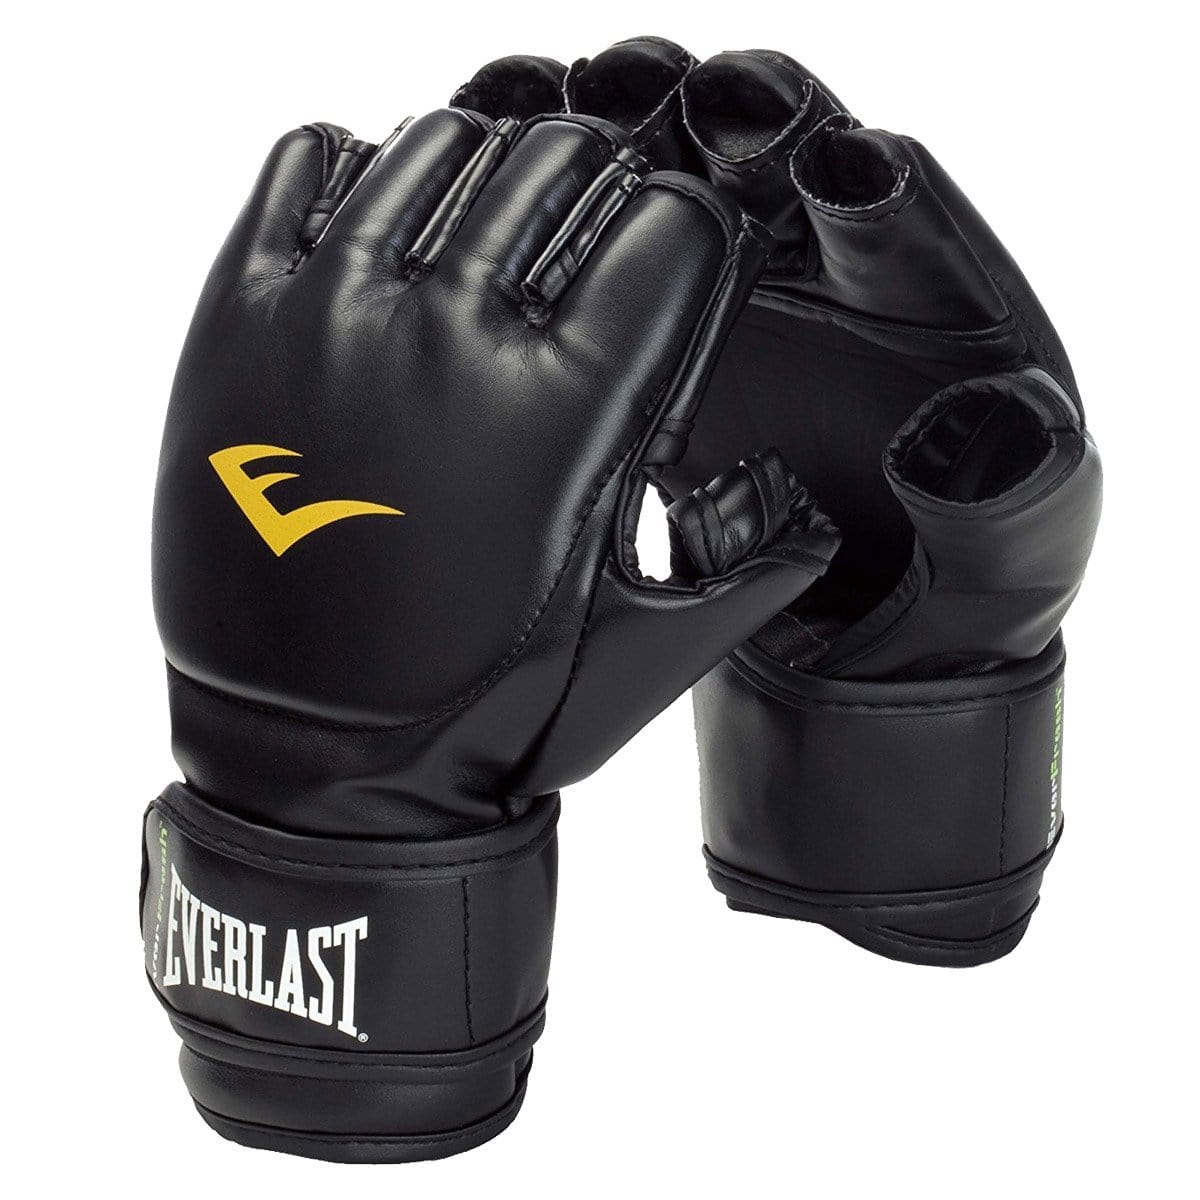 Everlast Accessories Evh7560 Training Glove Black Evh7560